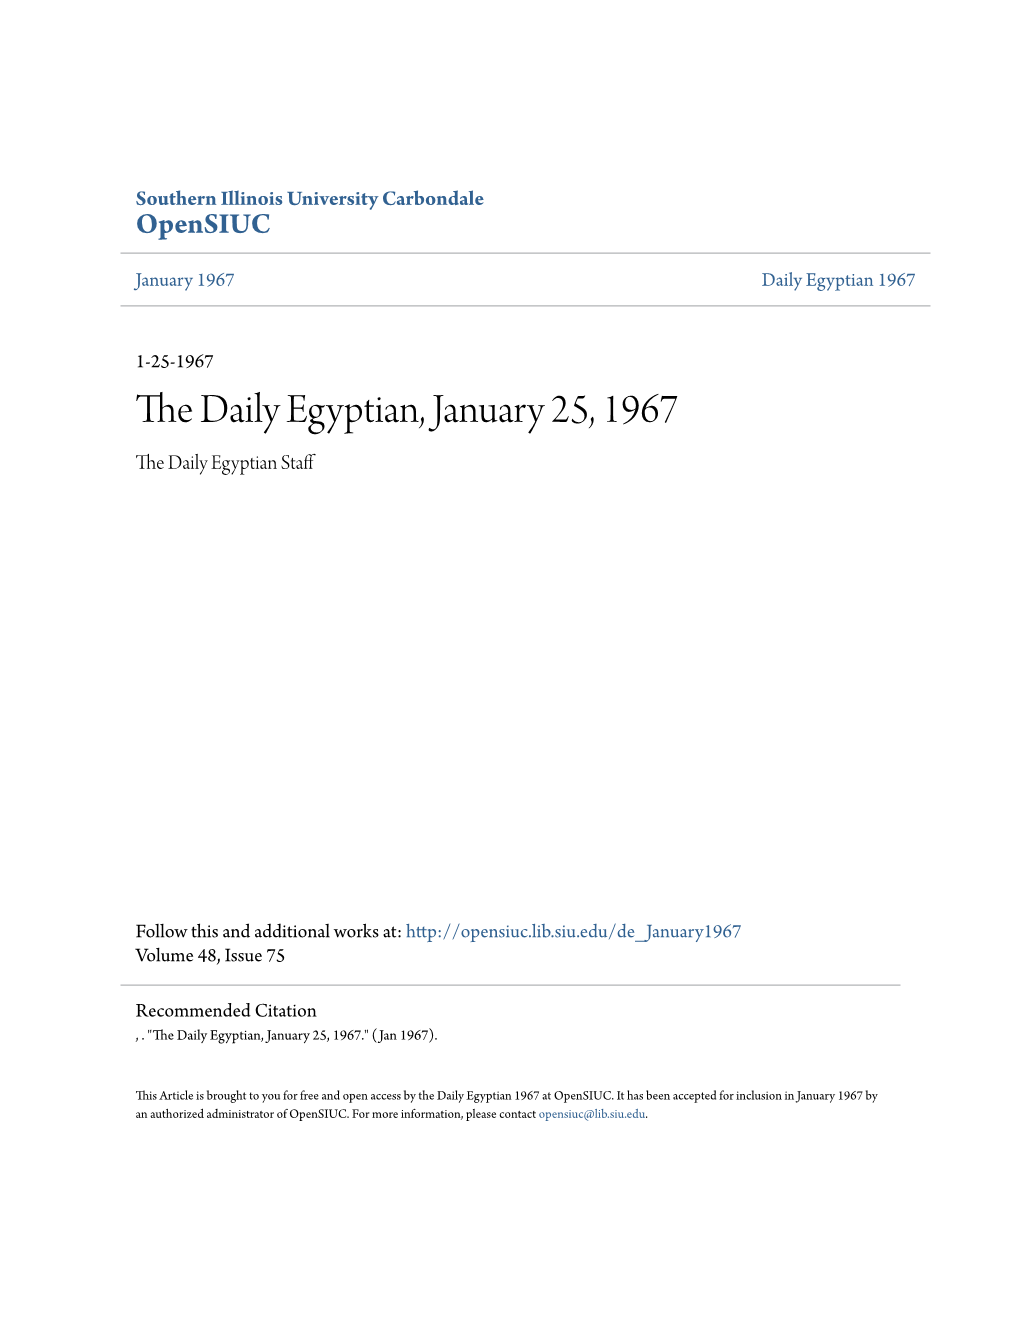 The Daily Egyptian, January 25, 1967